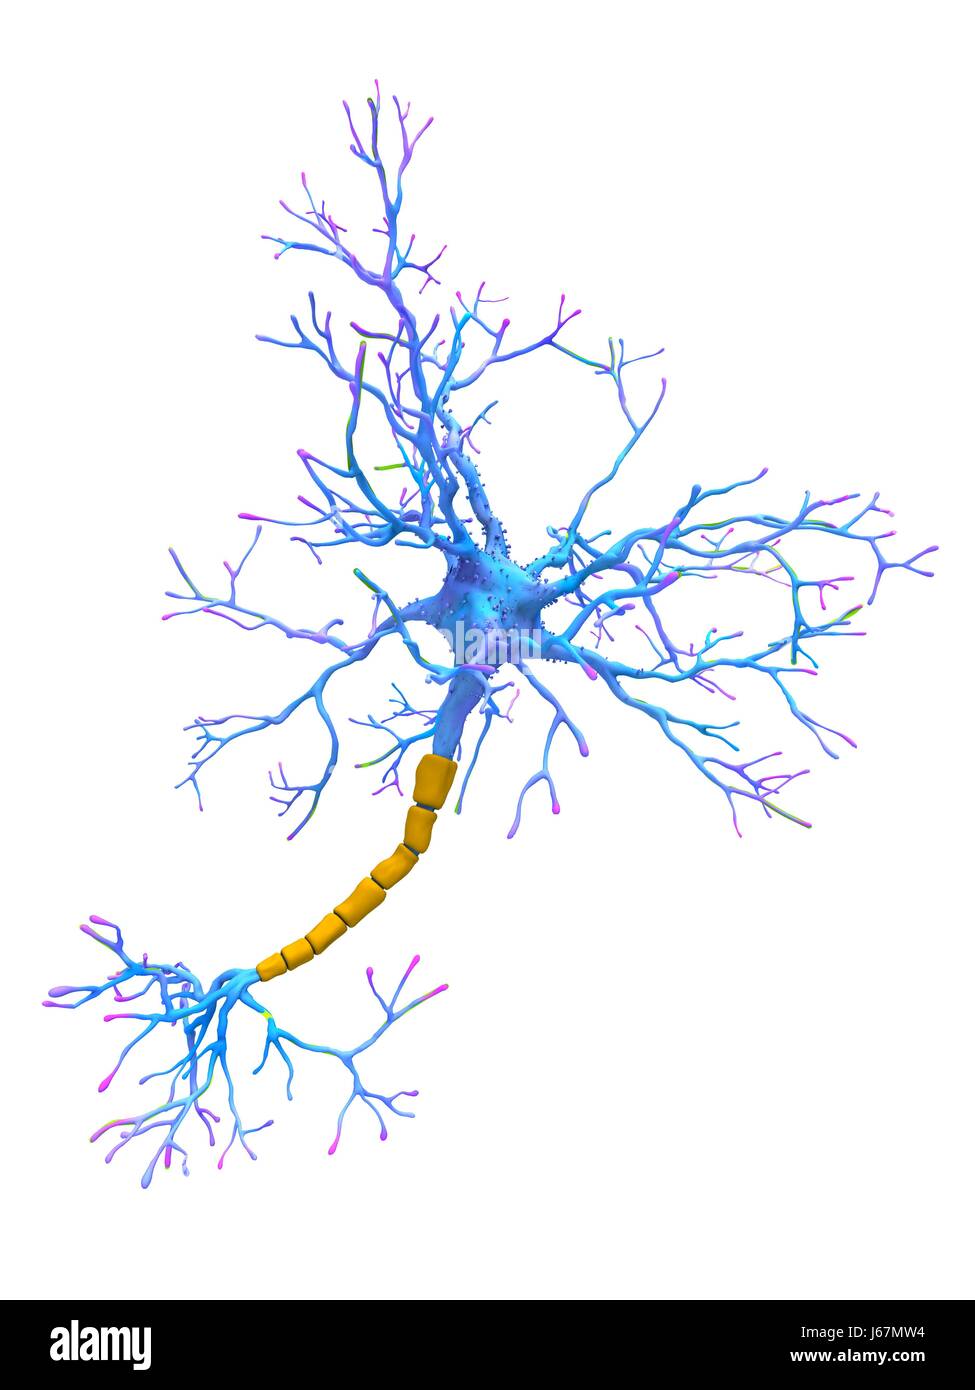 nervous system neurons